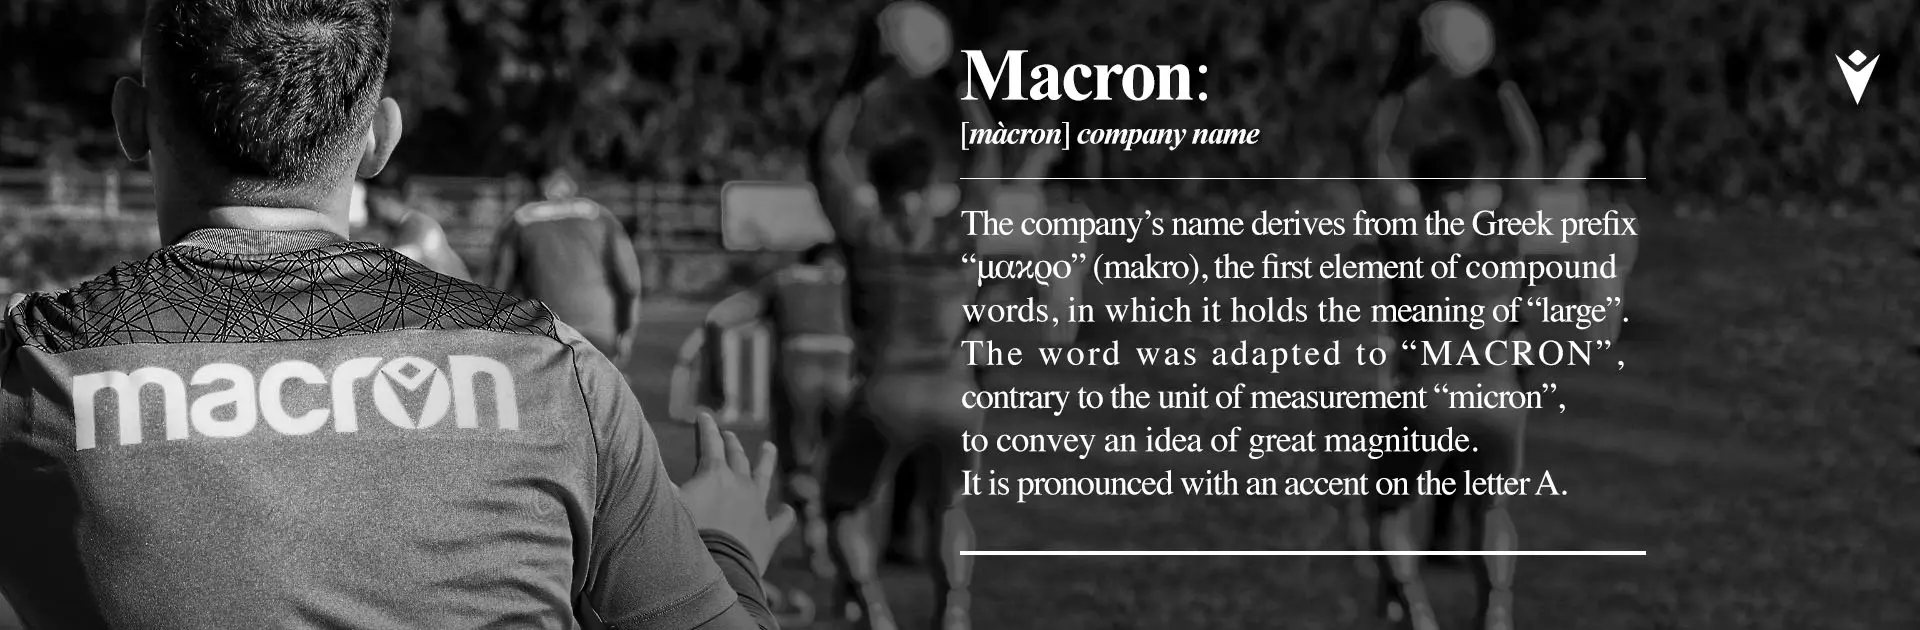 macron sportshub muenchen - sportbekleidung teamwear showroom Macron Name